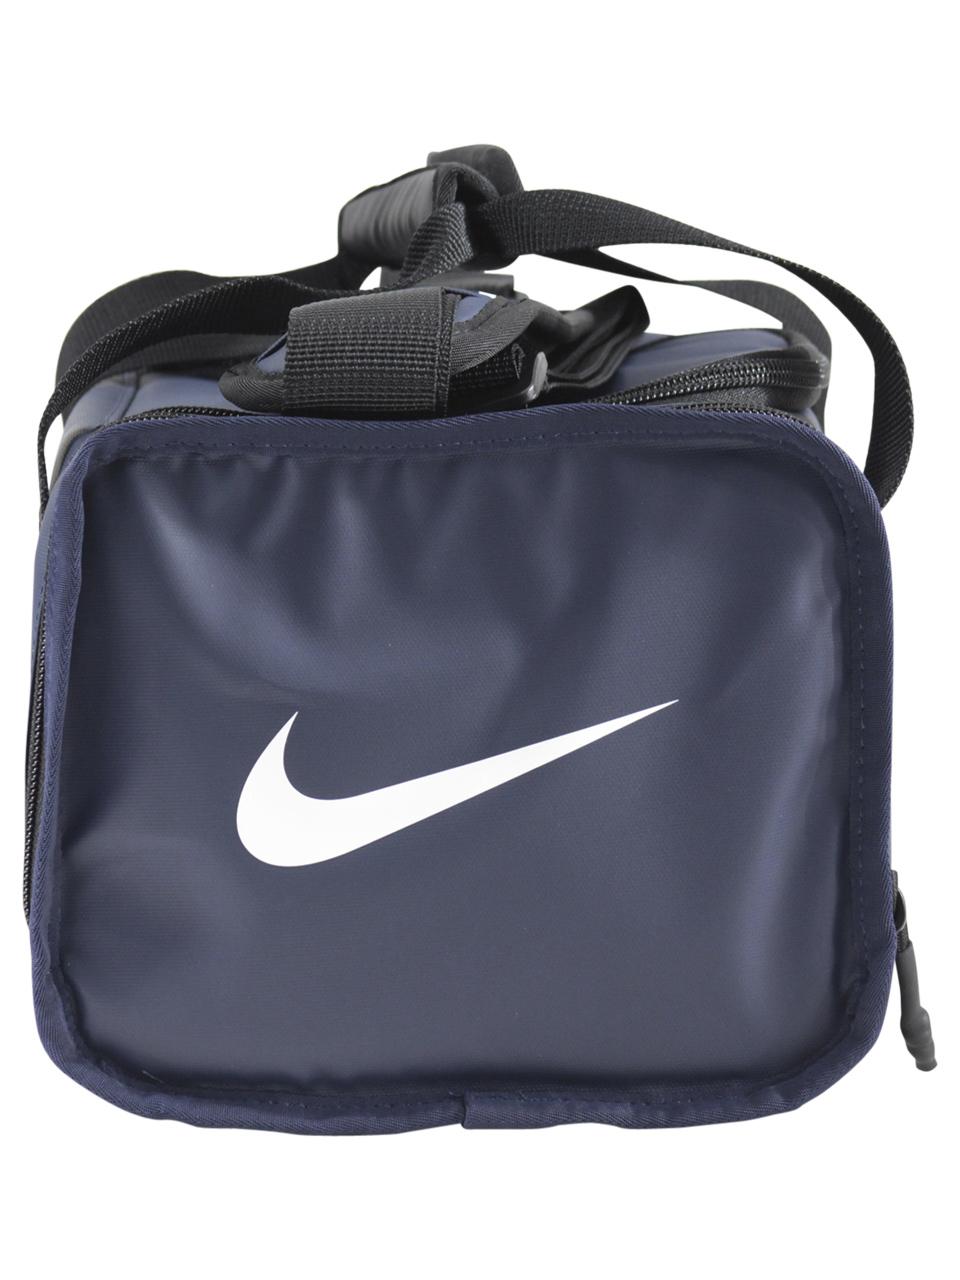 Nike Kid's Brasilia Insulated Medium Lunch Box Bag